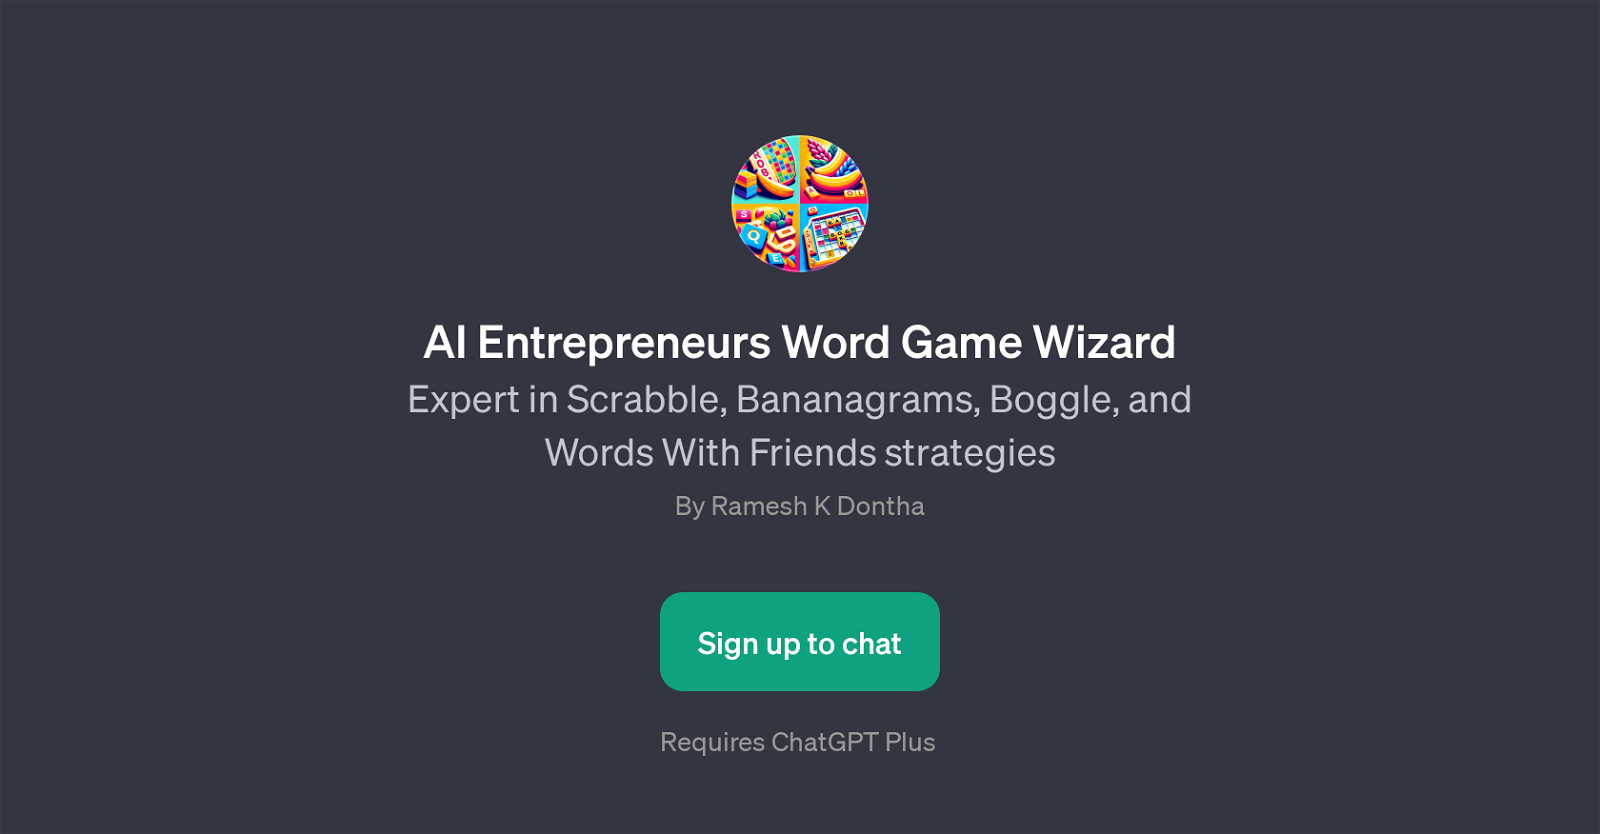 AI Entrepreneurs Word Game Wizard website